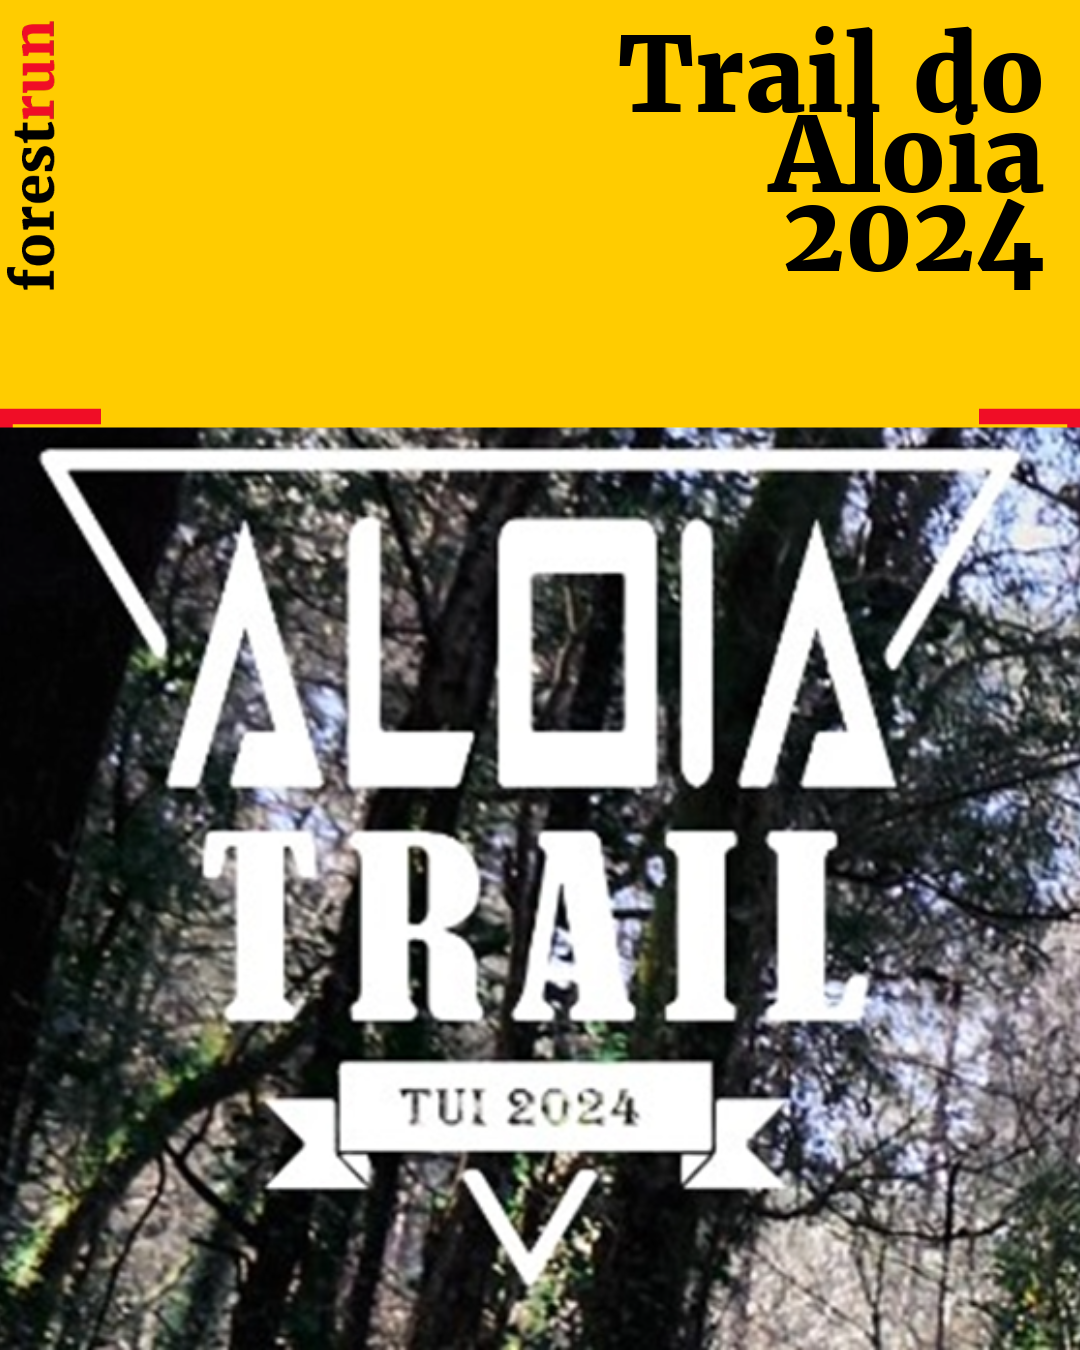 Trail do Aloia 2024